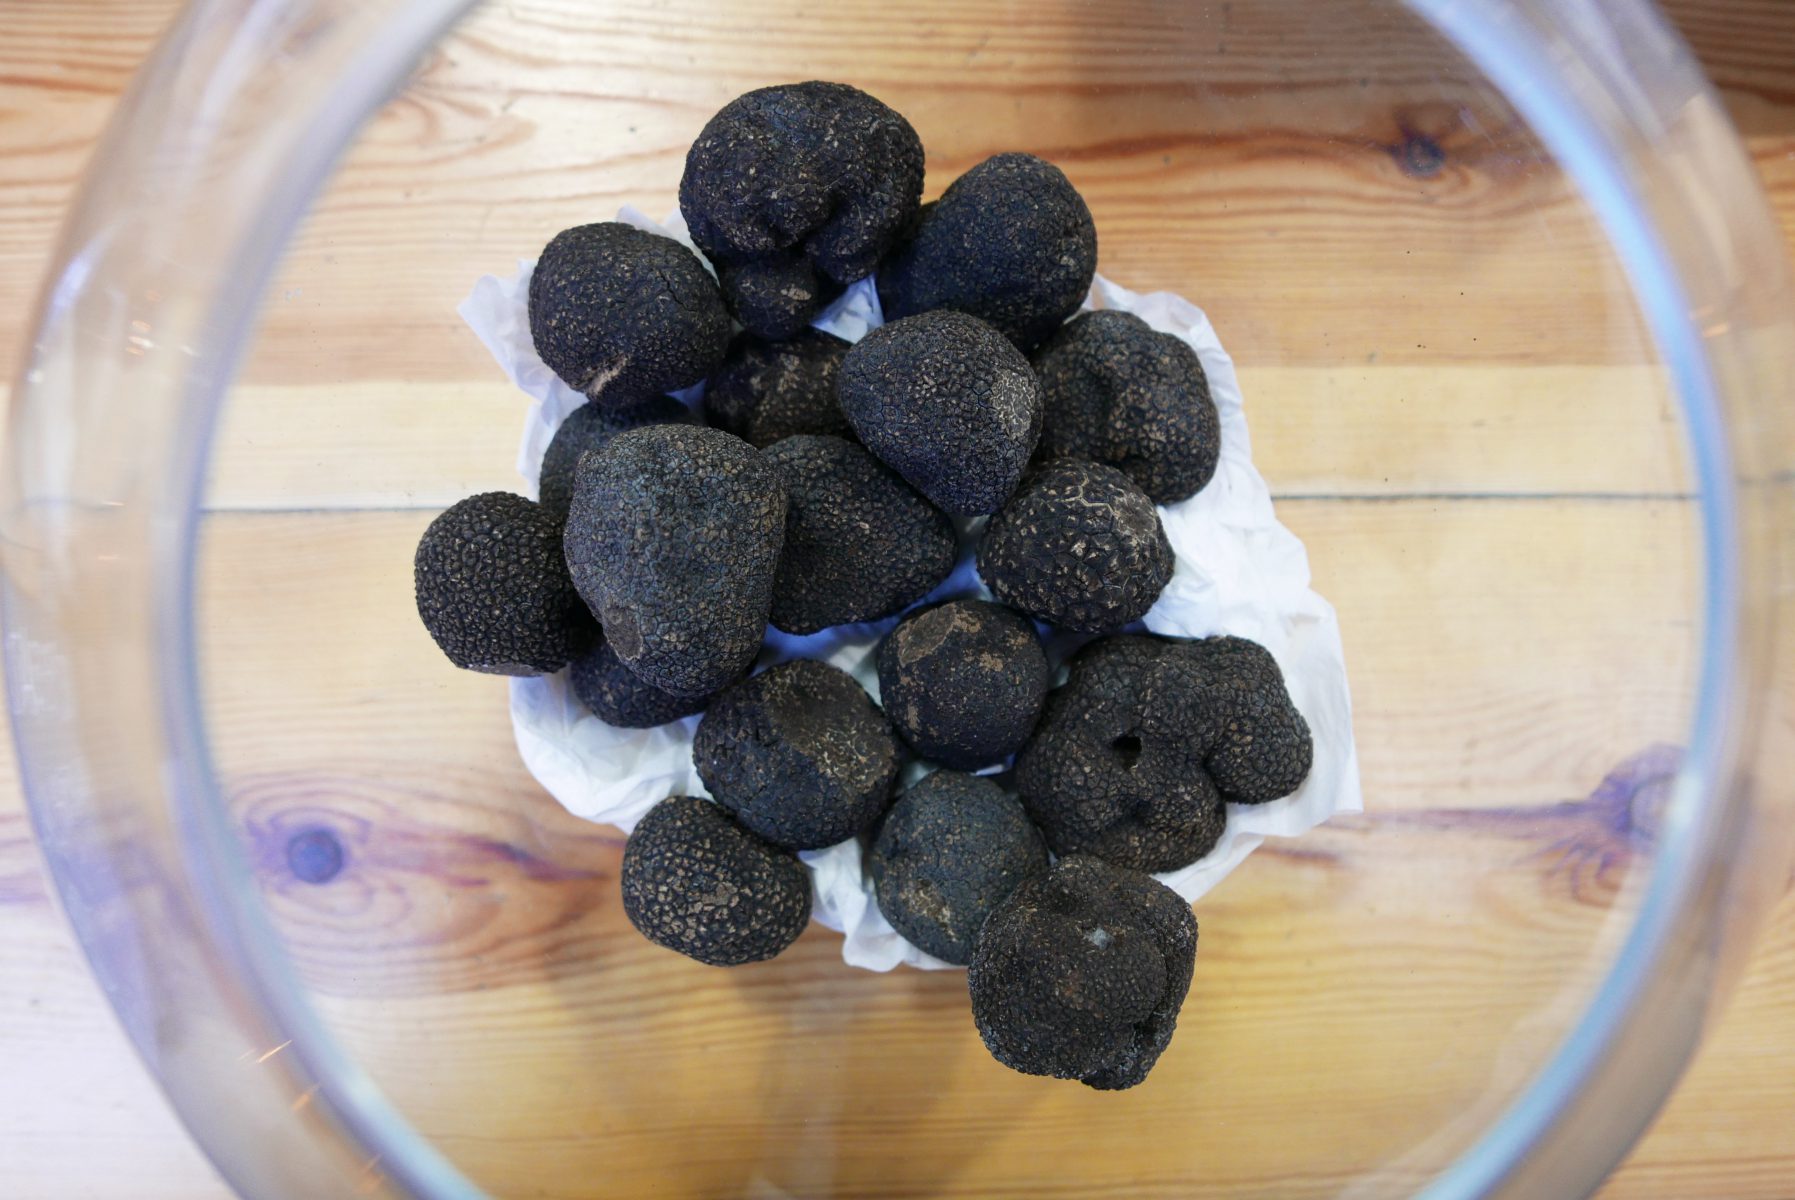 Périgord truffles at Borough market